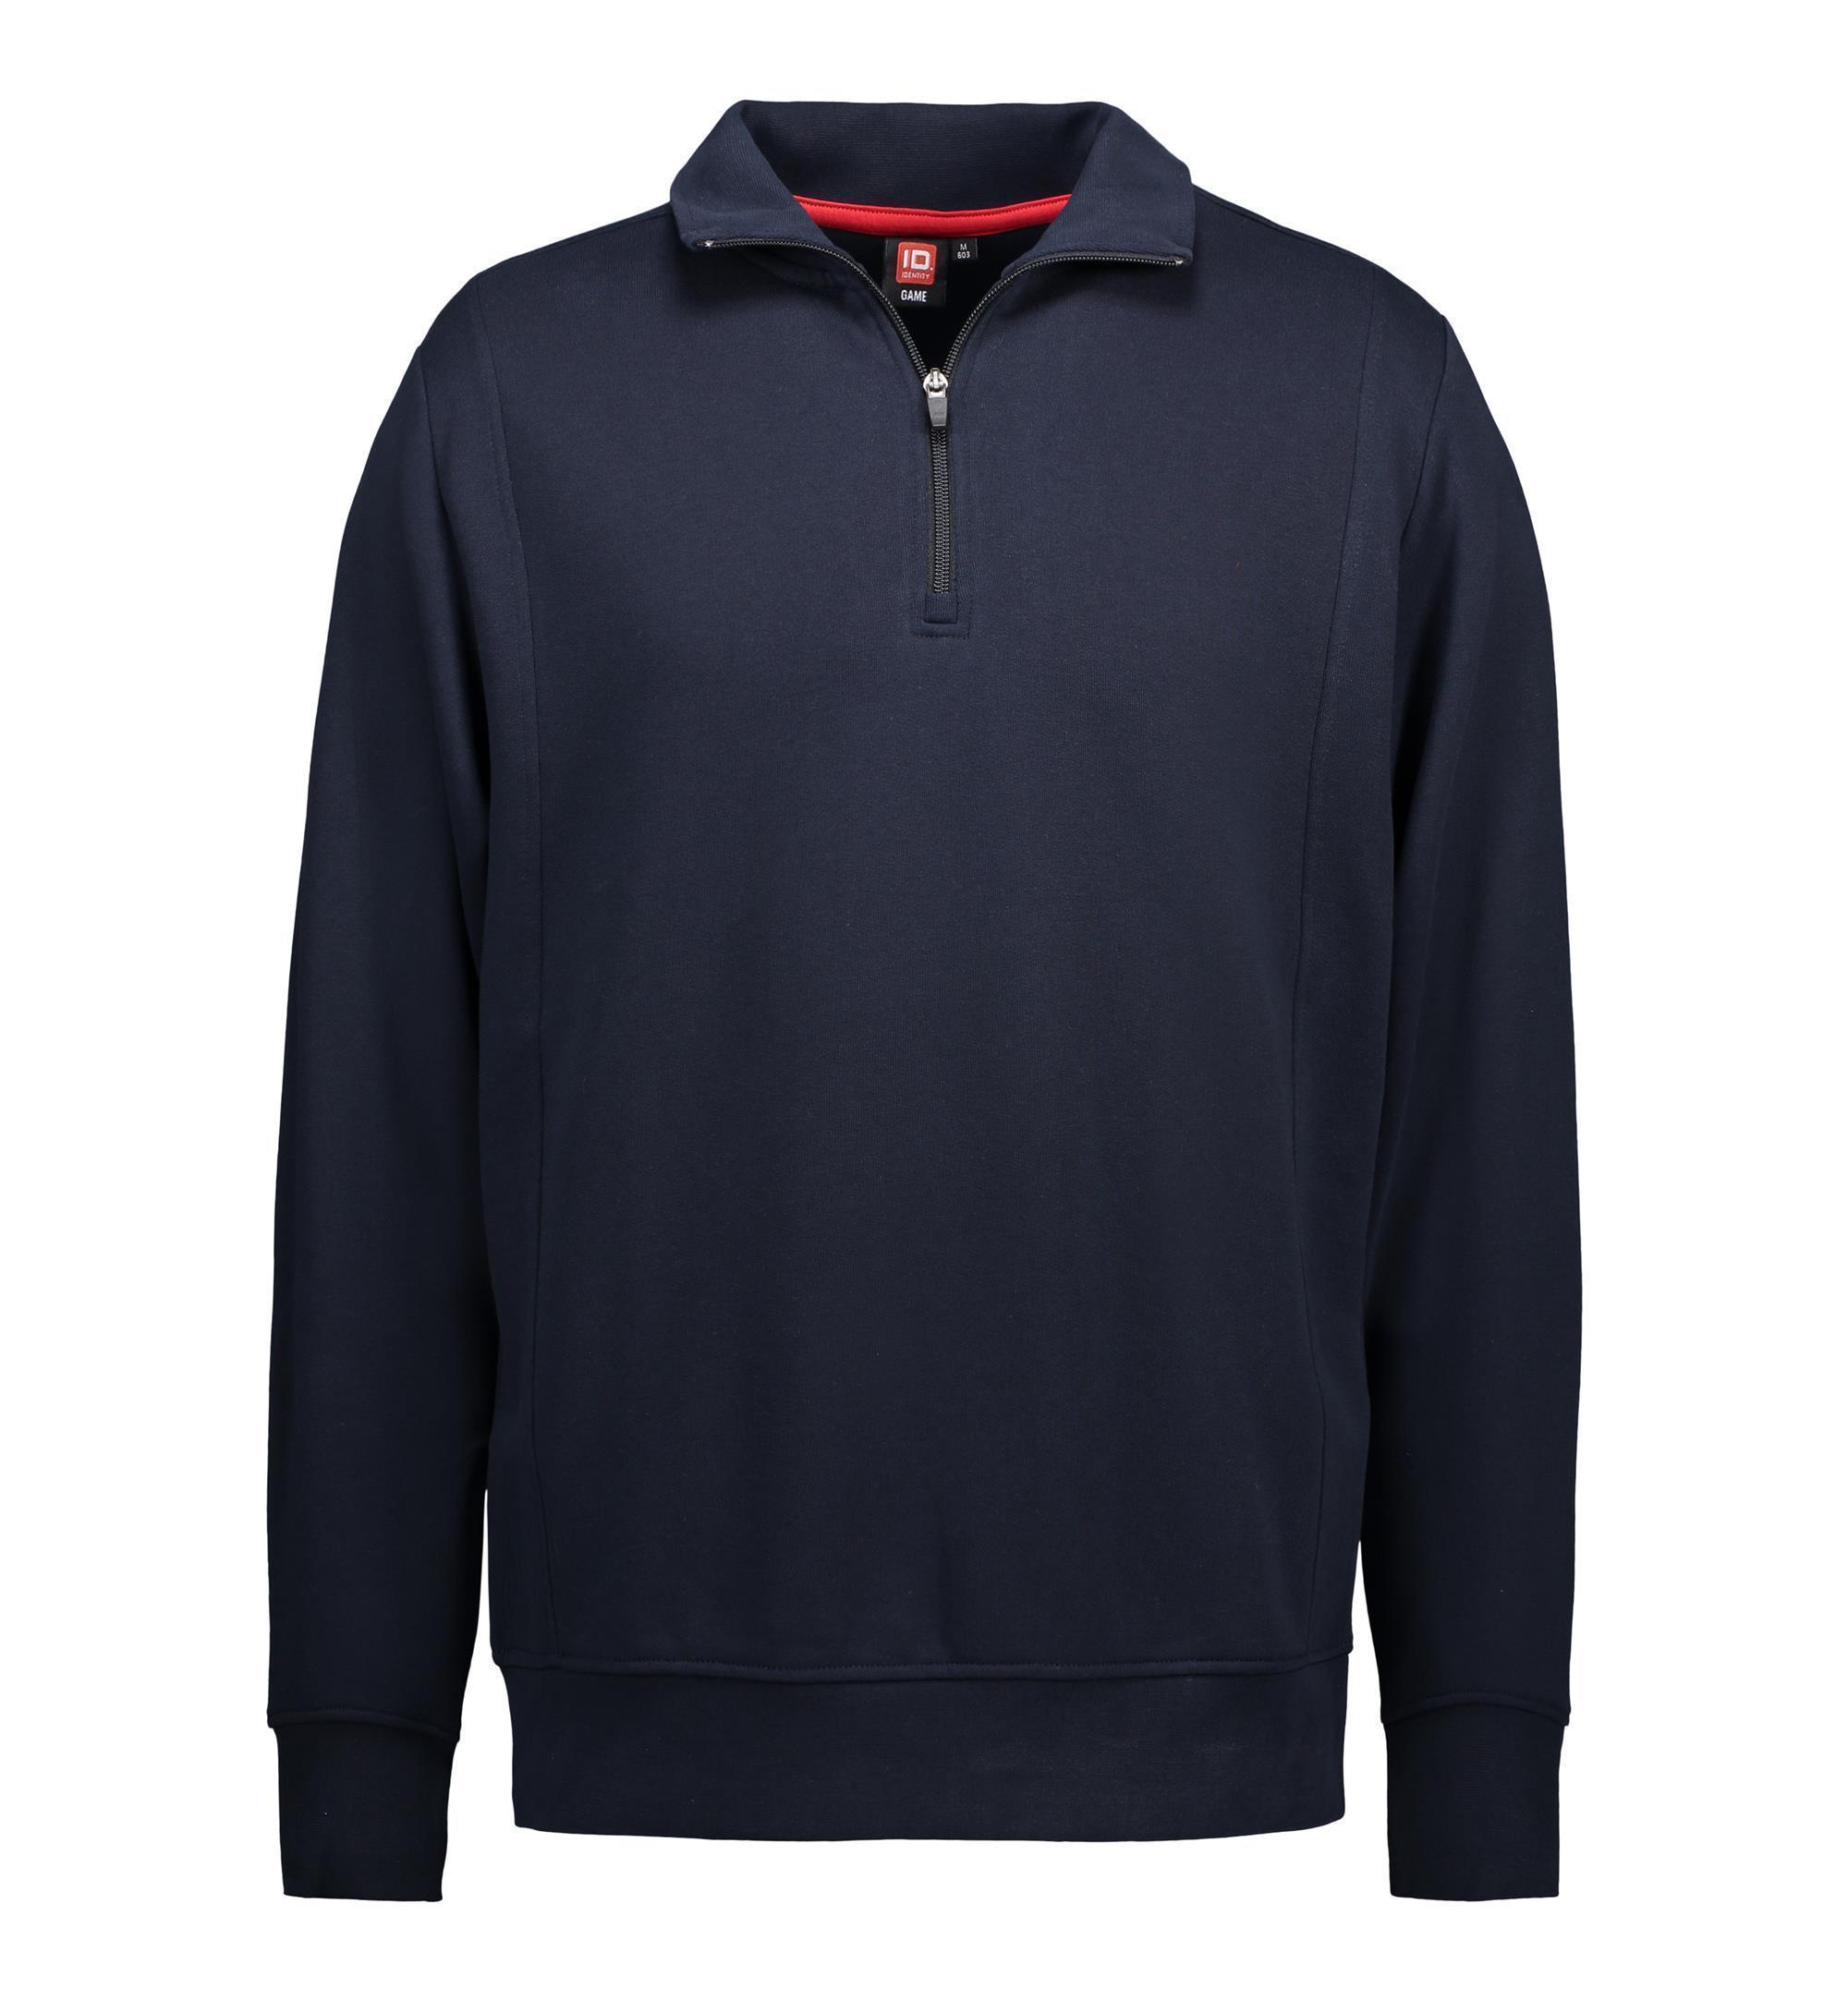 Men's sweatshirt with zip 330-340 g/m² ID Identity®